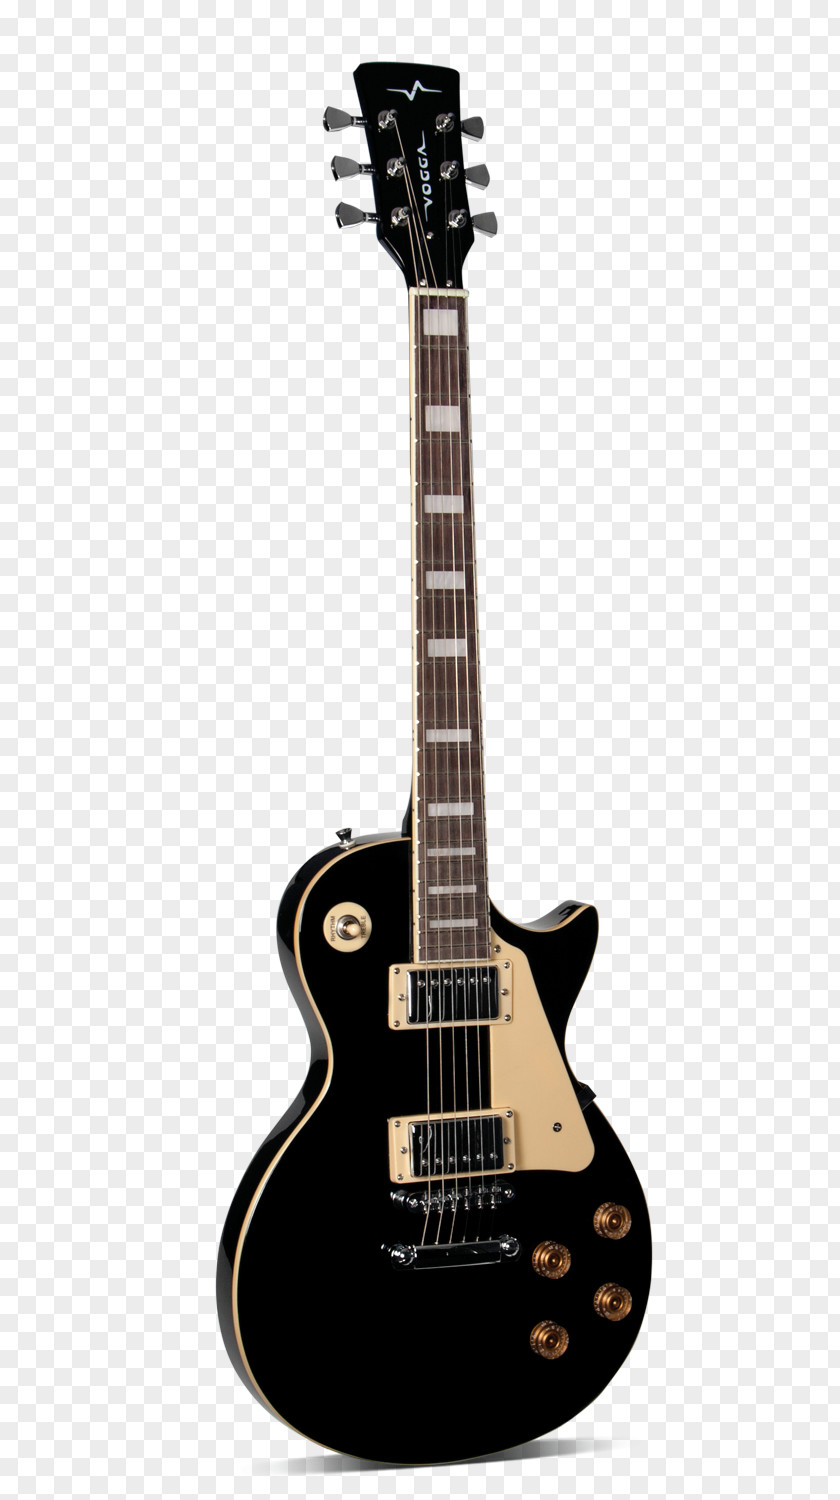 Electric Guitar Gibson Les Paul Brands, Inc. Epiphone Bass PNG